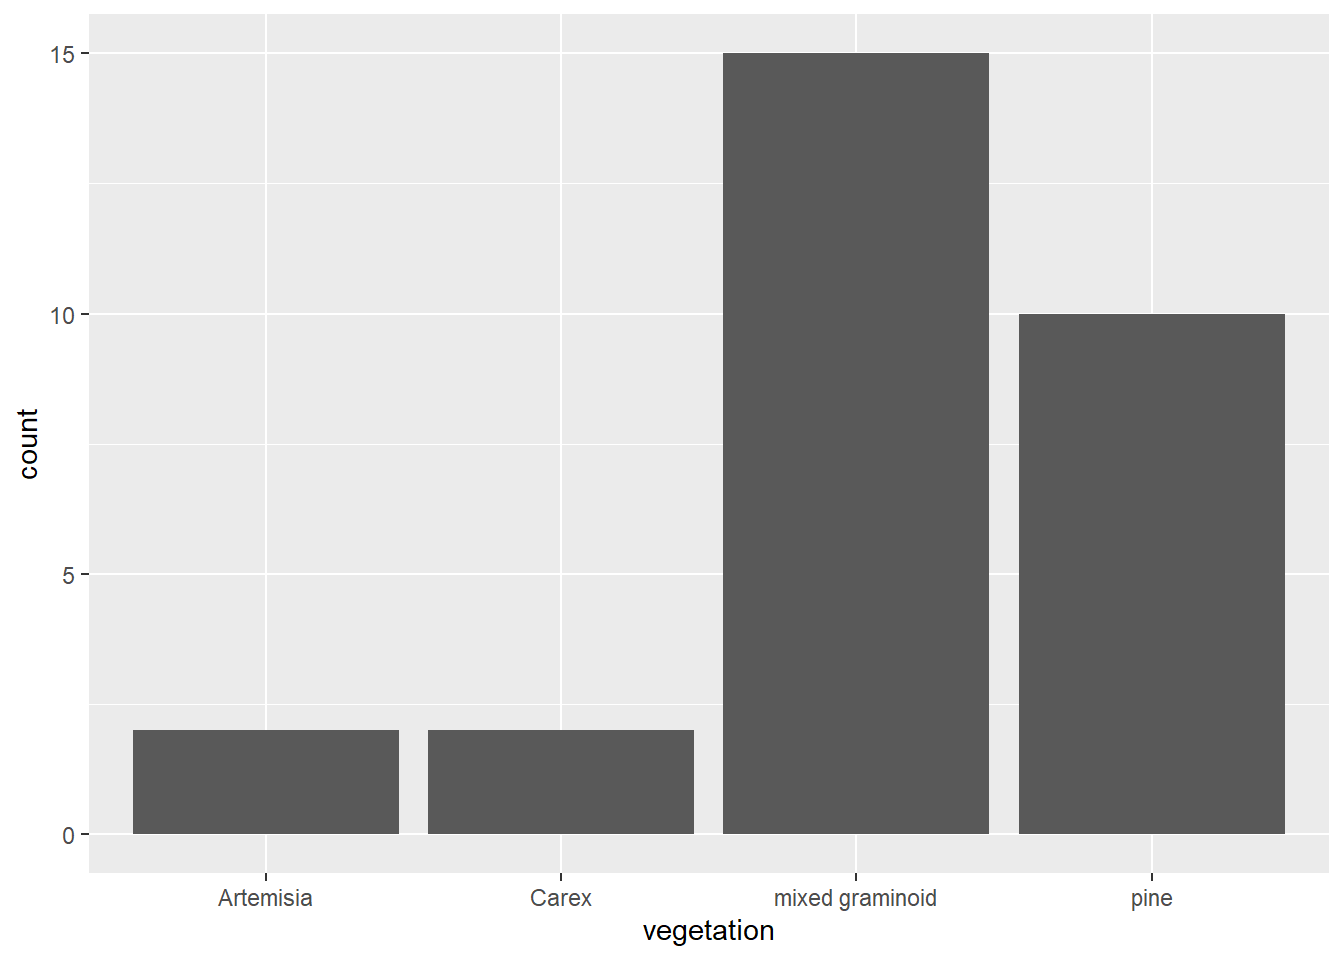 Simple bar graph of meadow vegetation samples